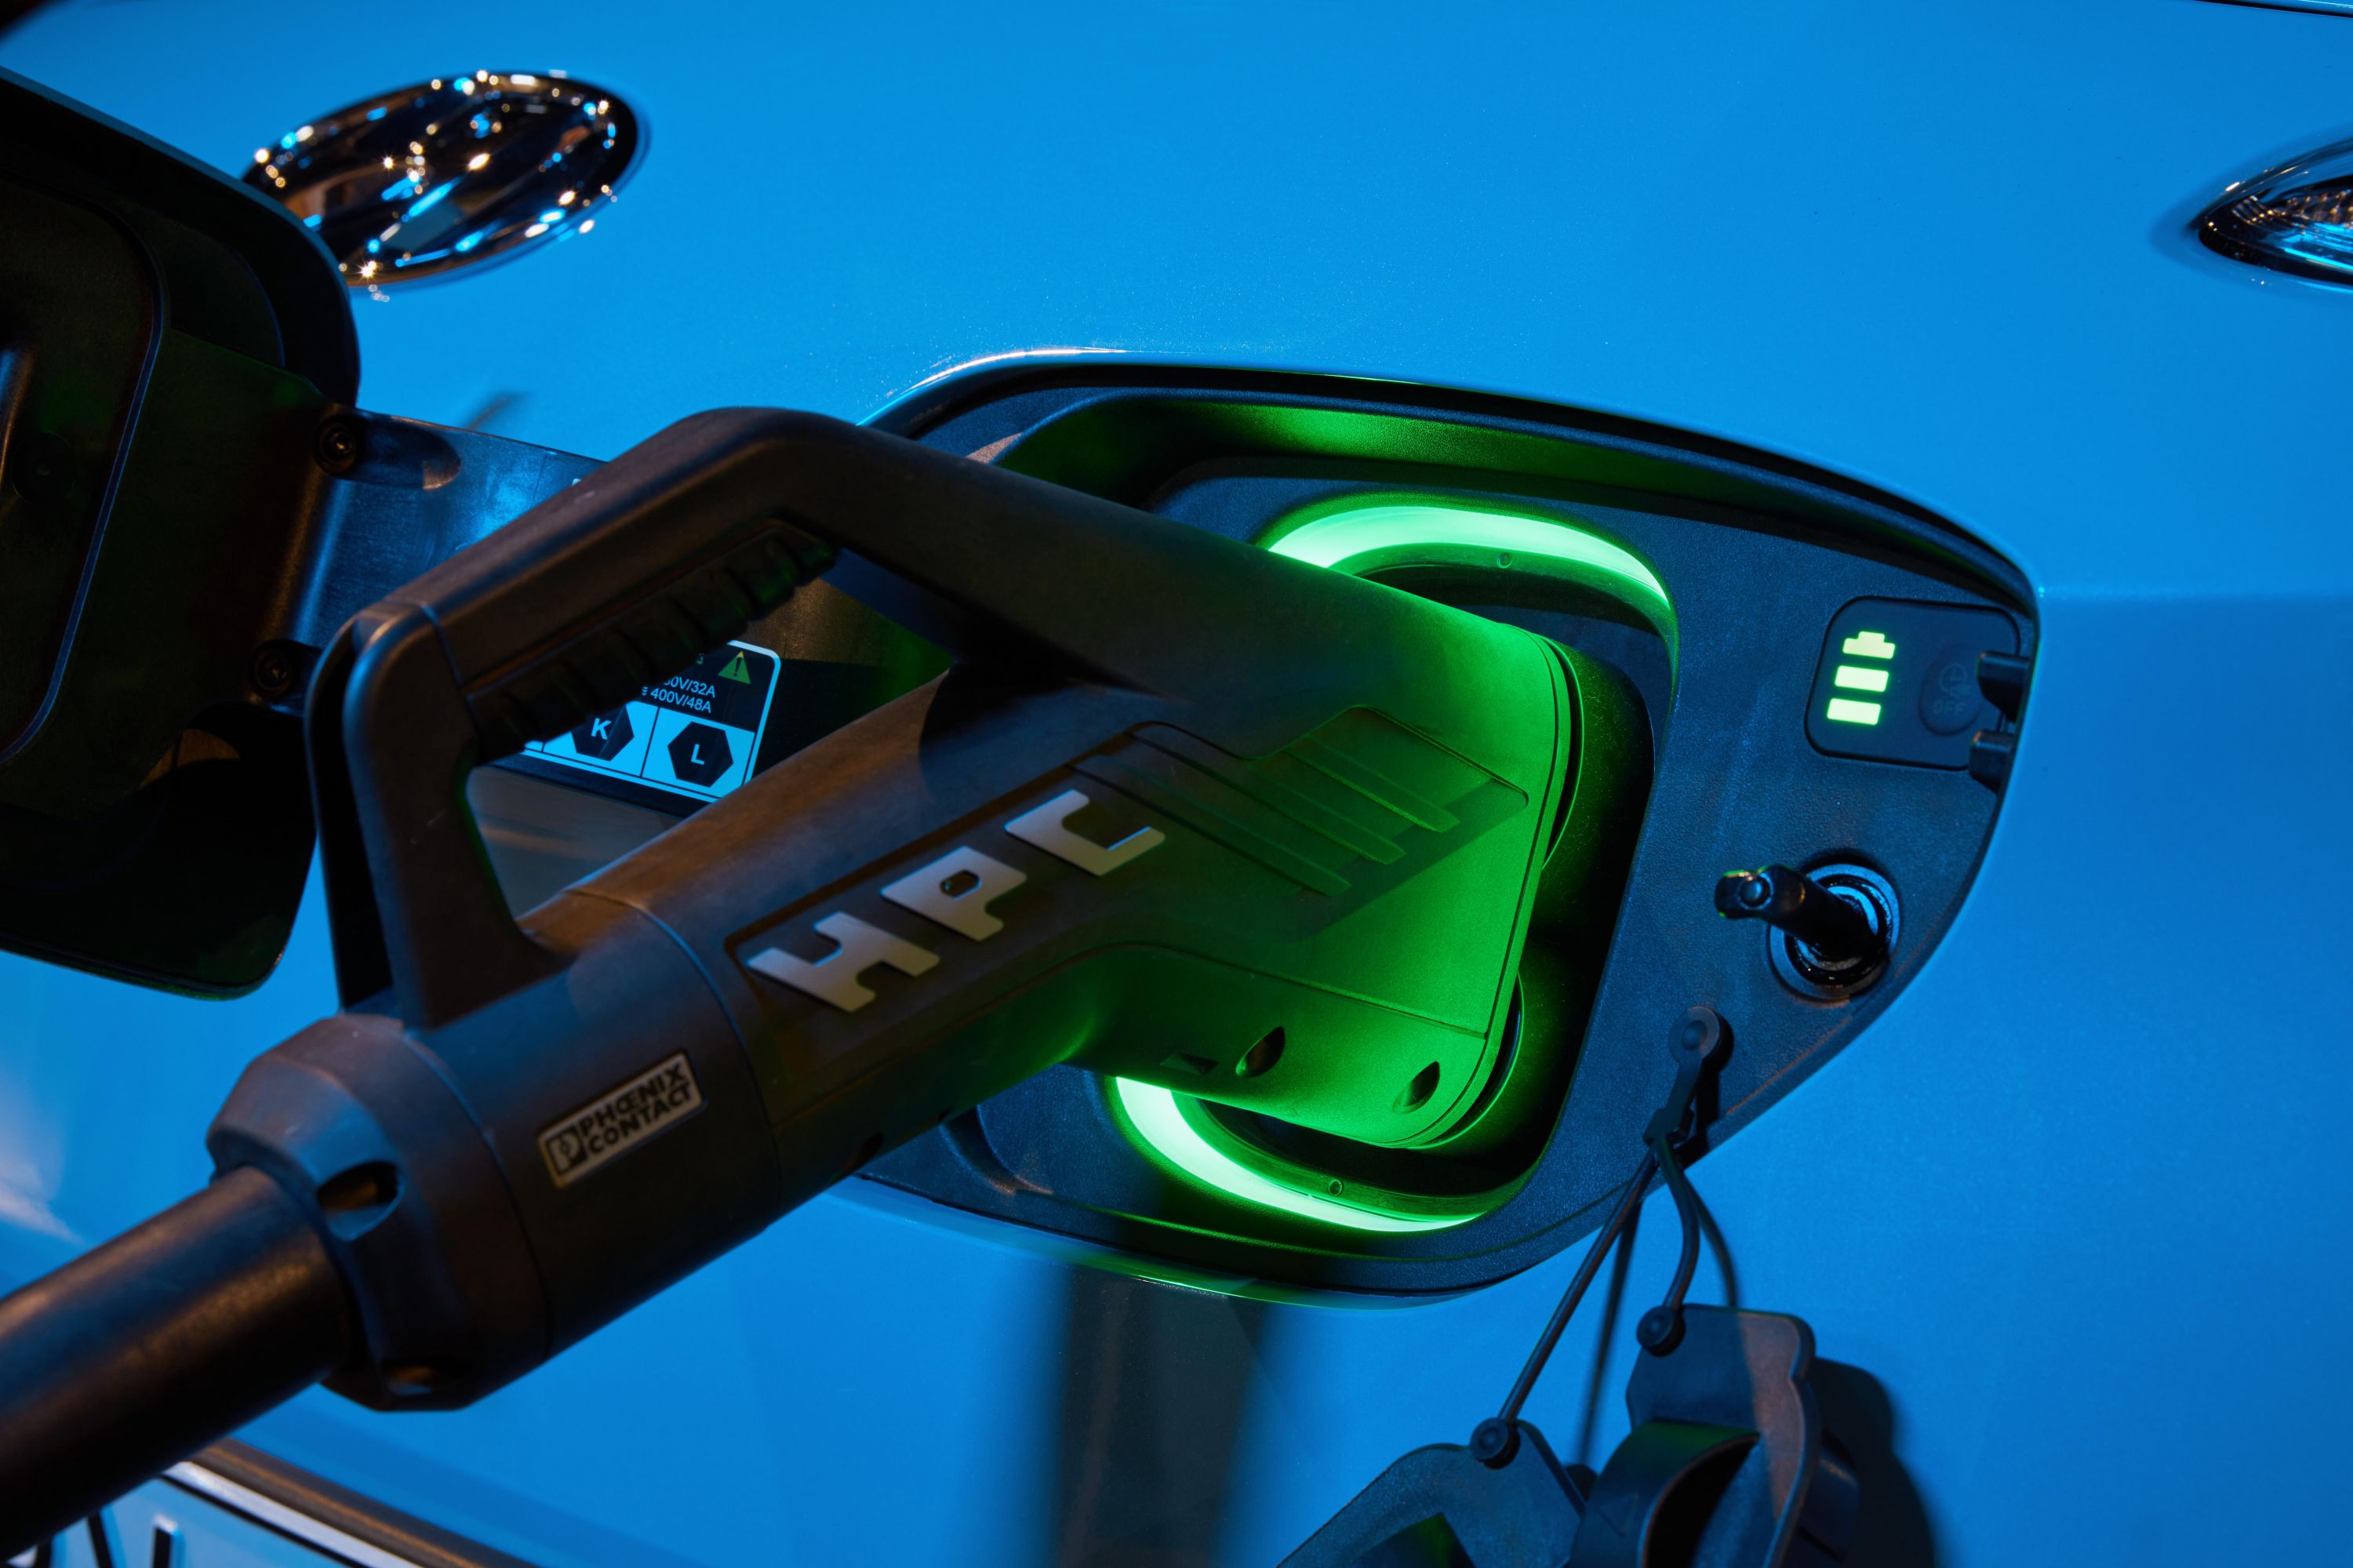 Australian startup JOLT plans 5000 electric car charging stations